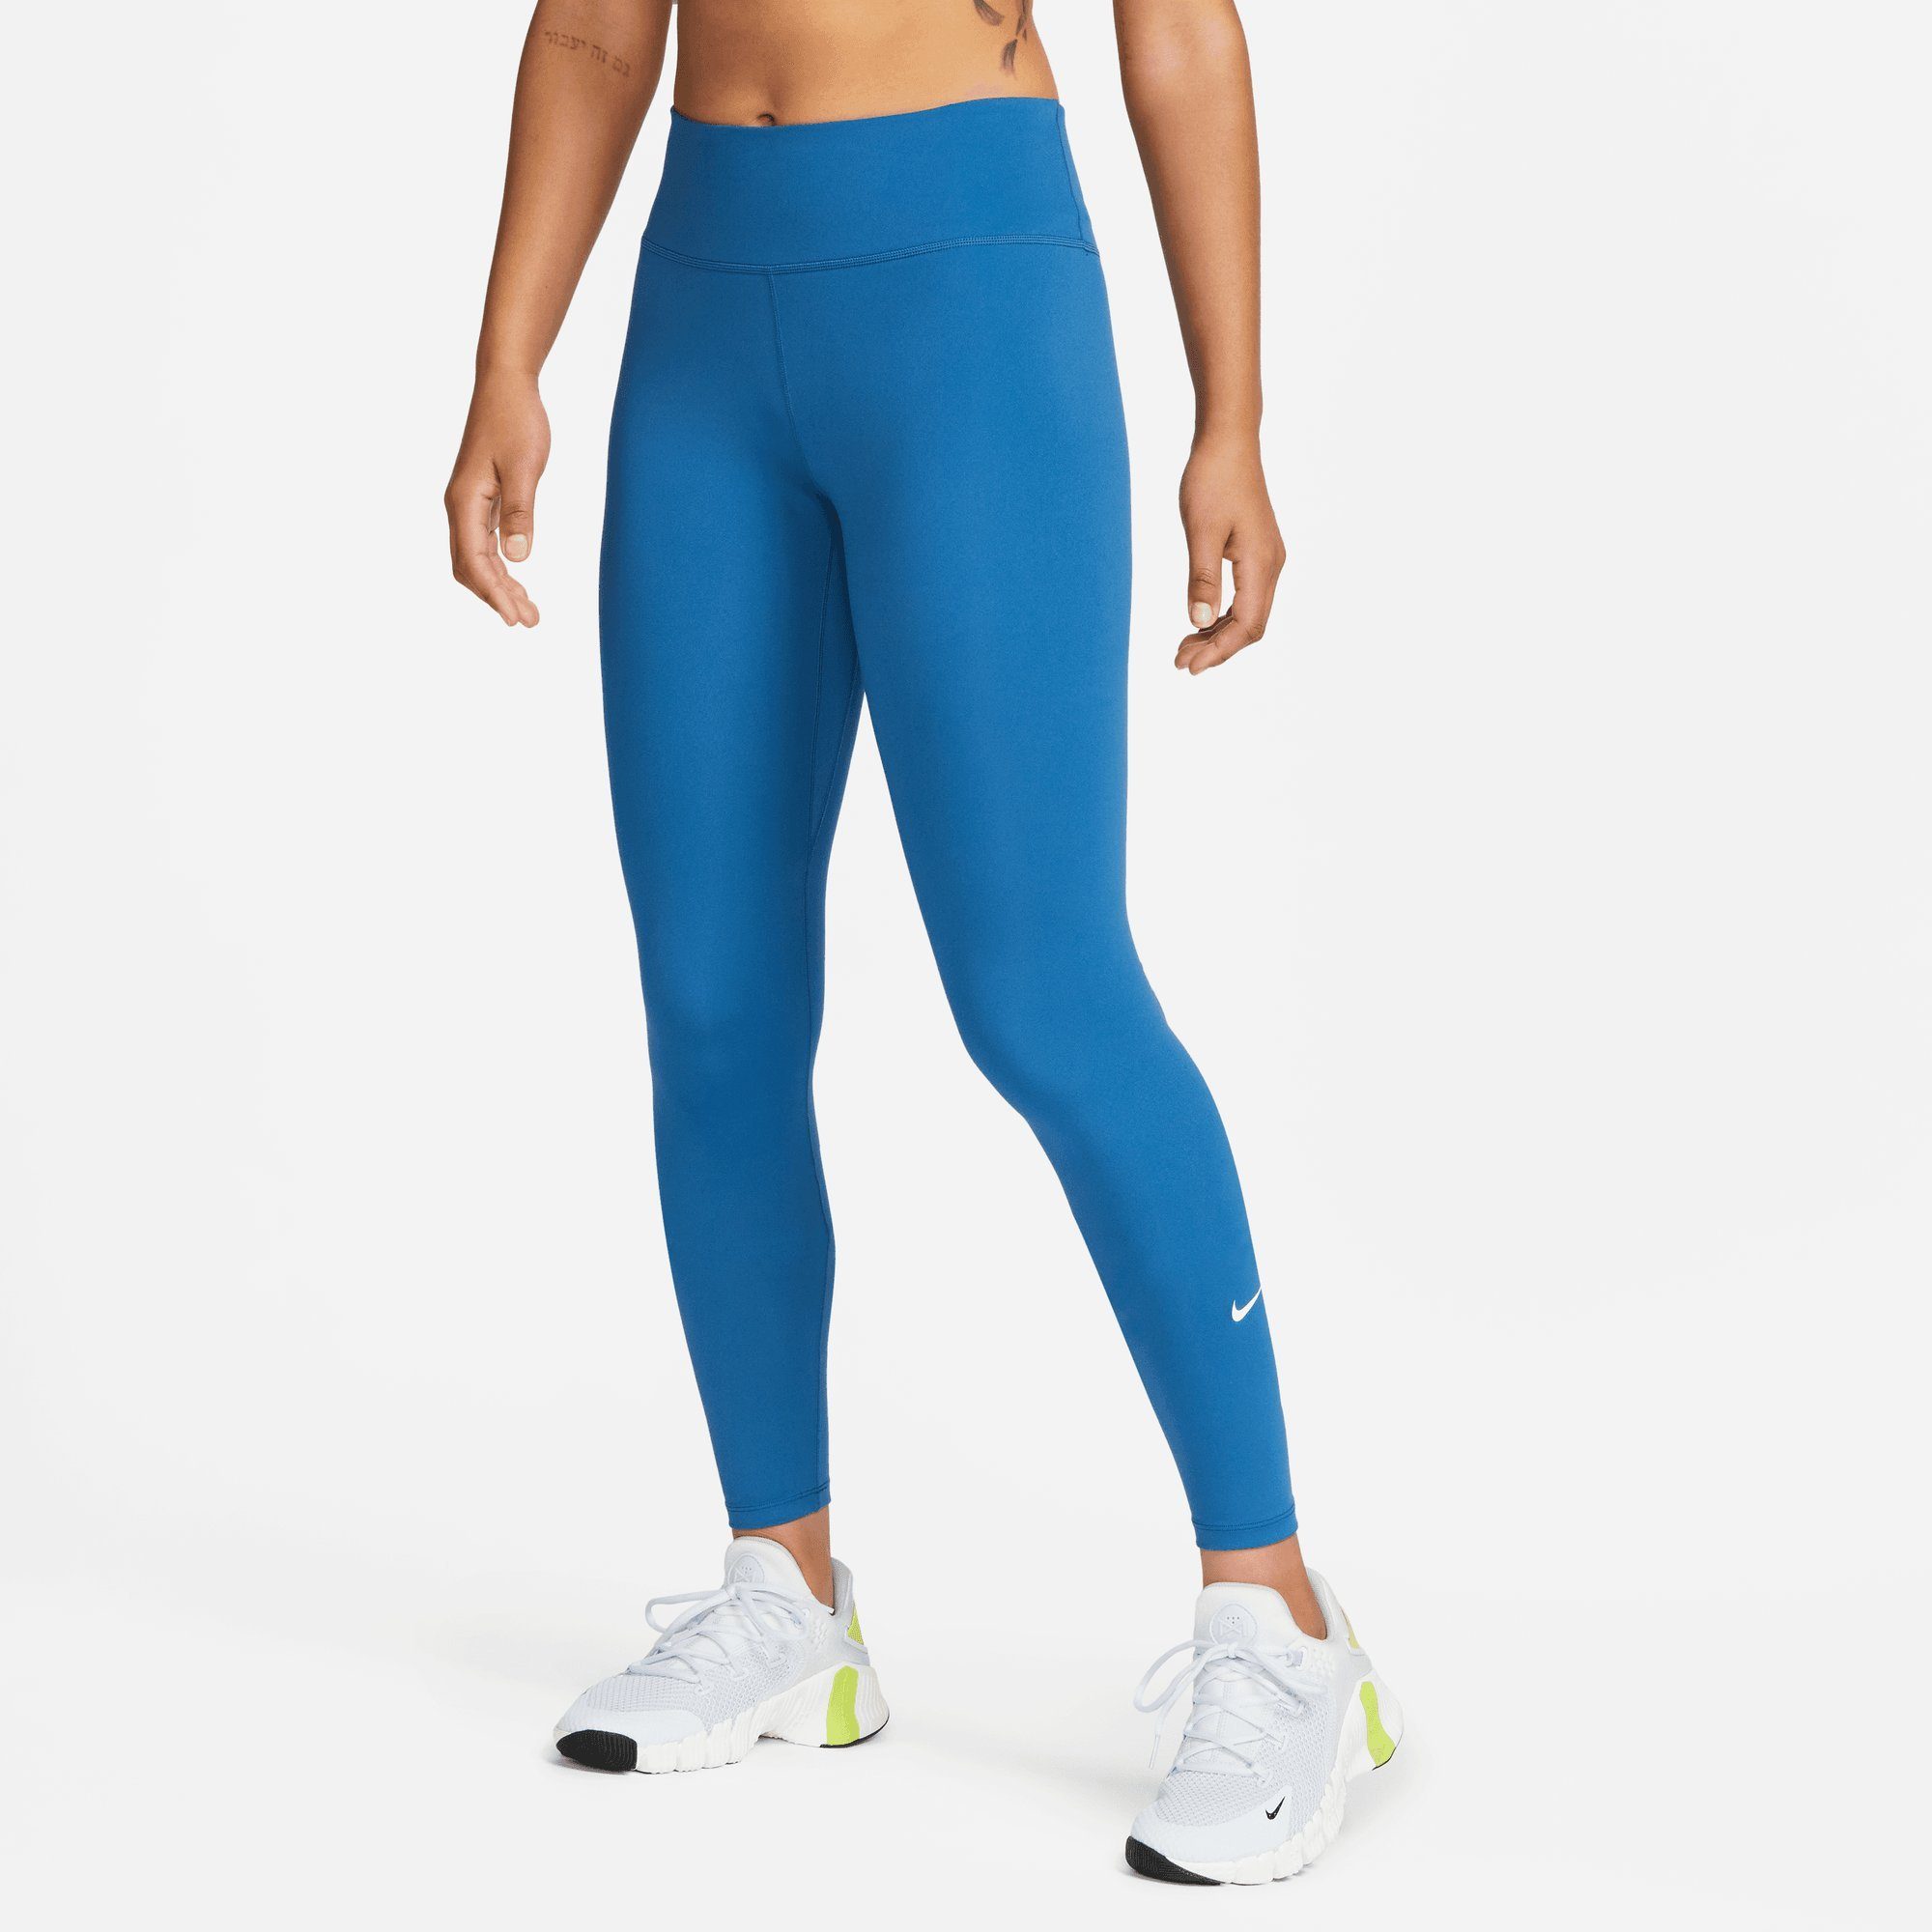 Möbelgeschäft ONE Nike WOMEN'S MID-RISE LEGGINGS BLUE/WHITE INDUSTRIAL Trainingstights